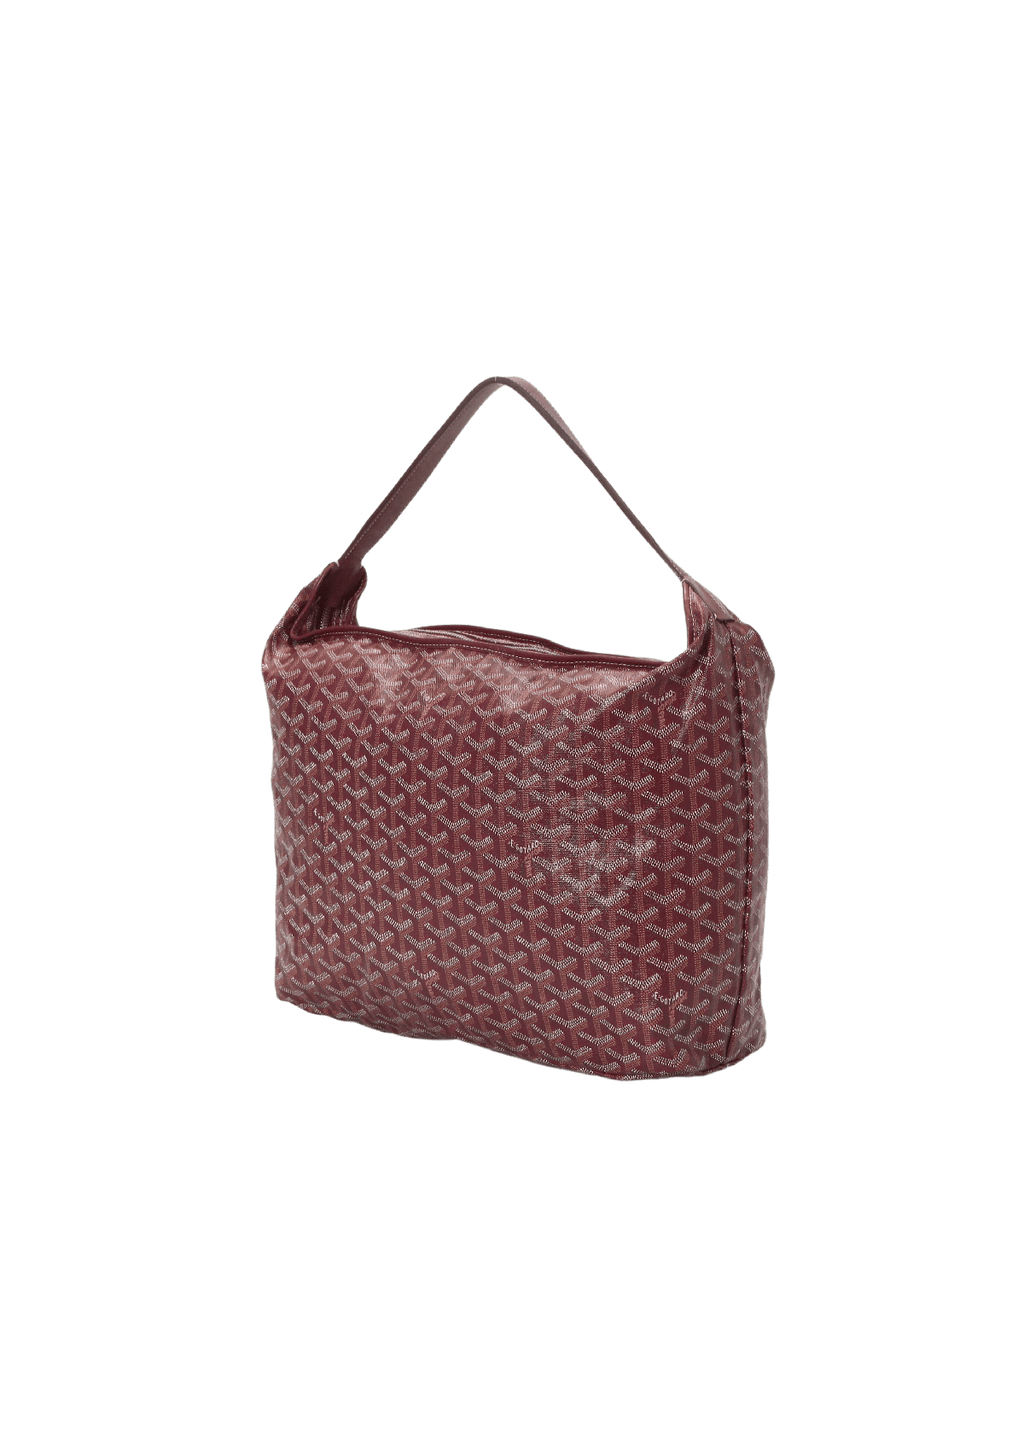 Goyard GOYARDINE HOBO bag 